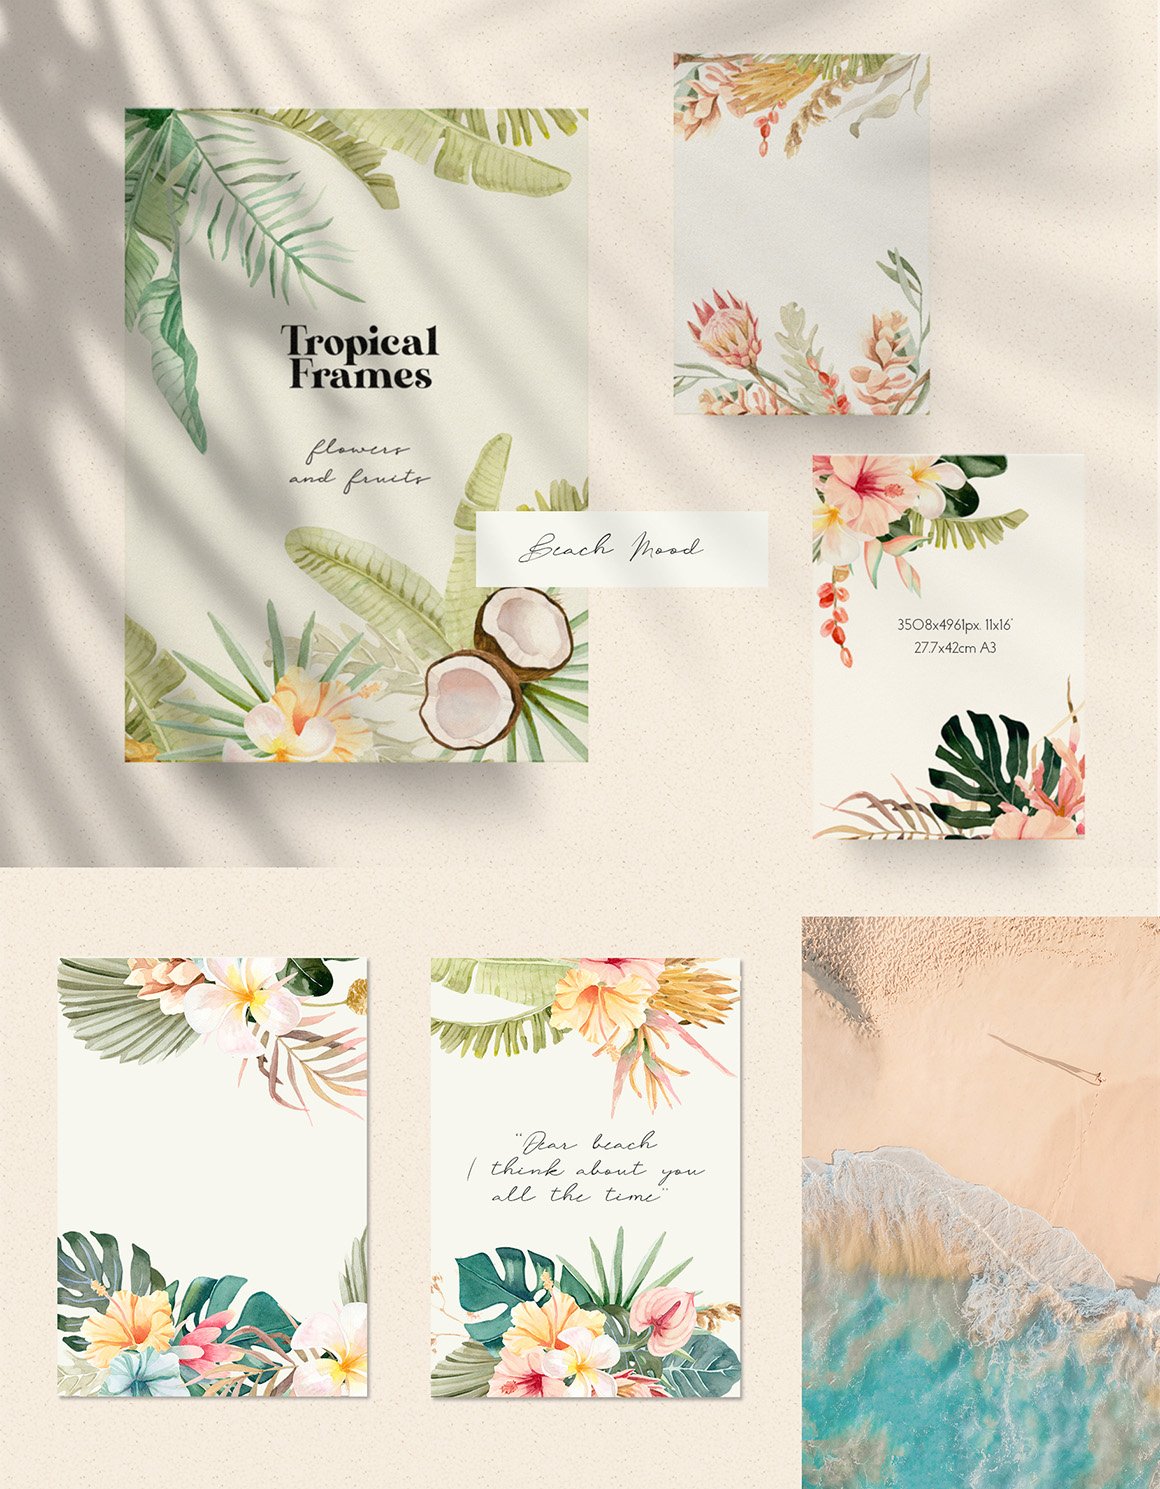 Tropical Flowers, Fruits, Leaves - Watercolor Set